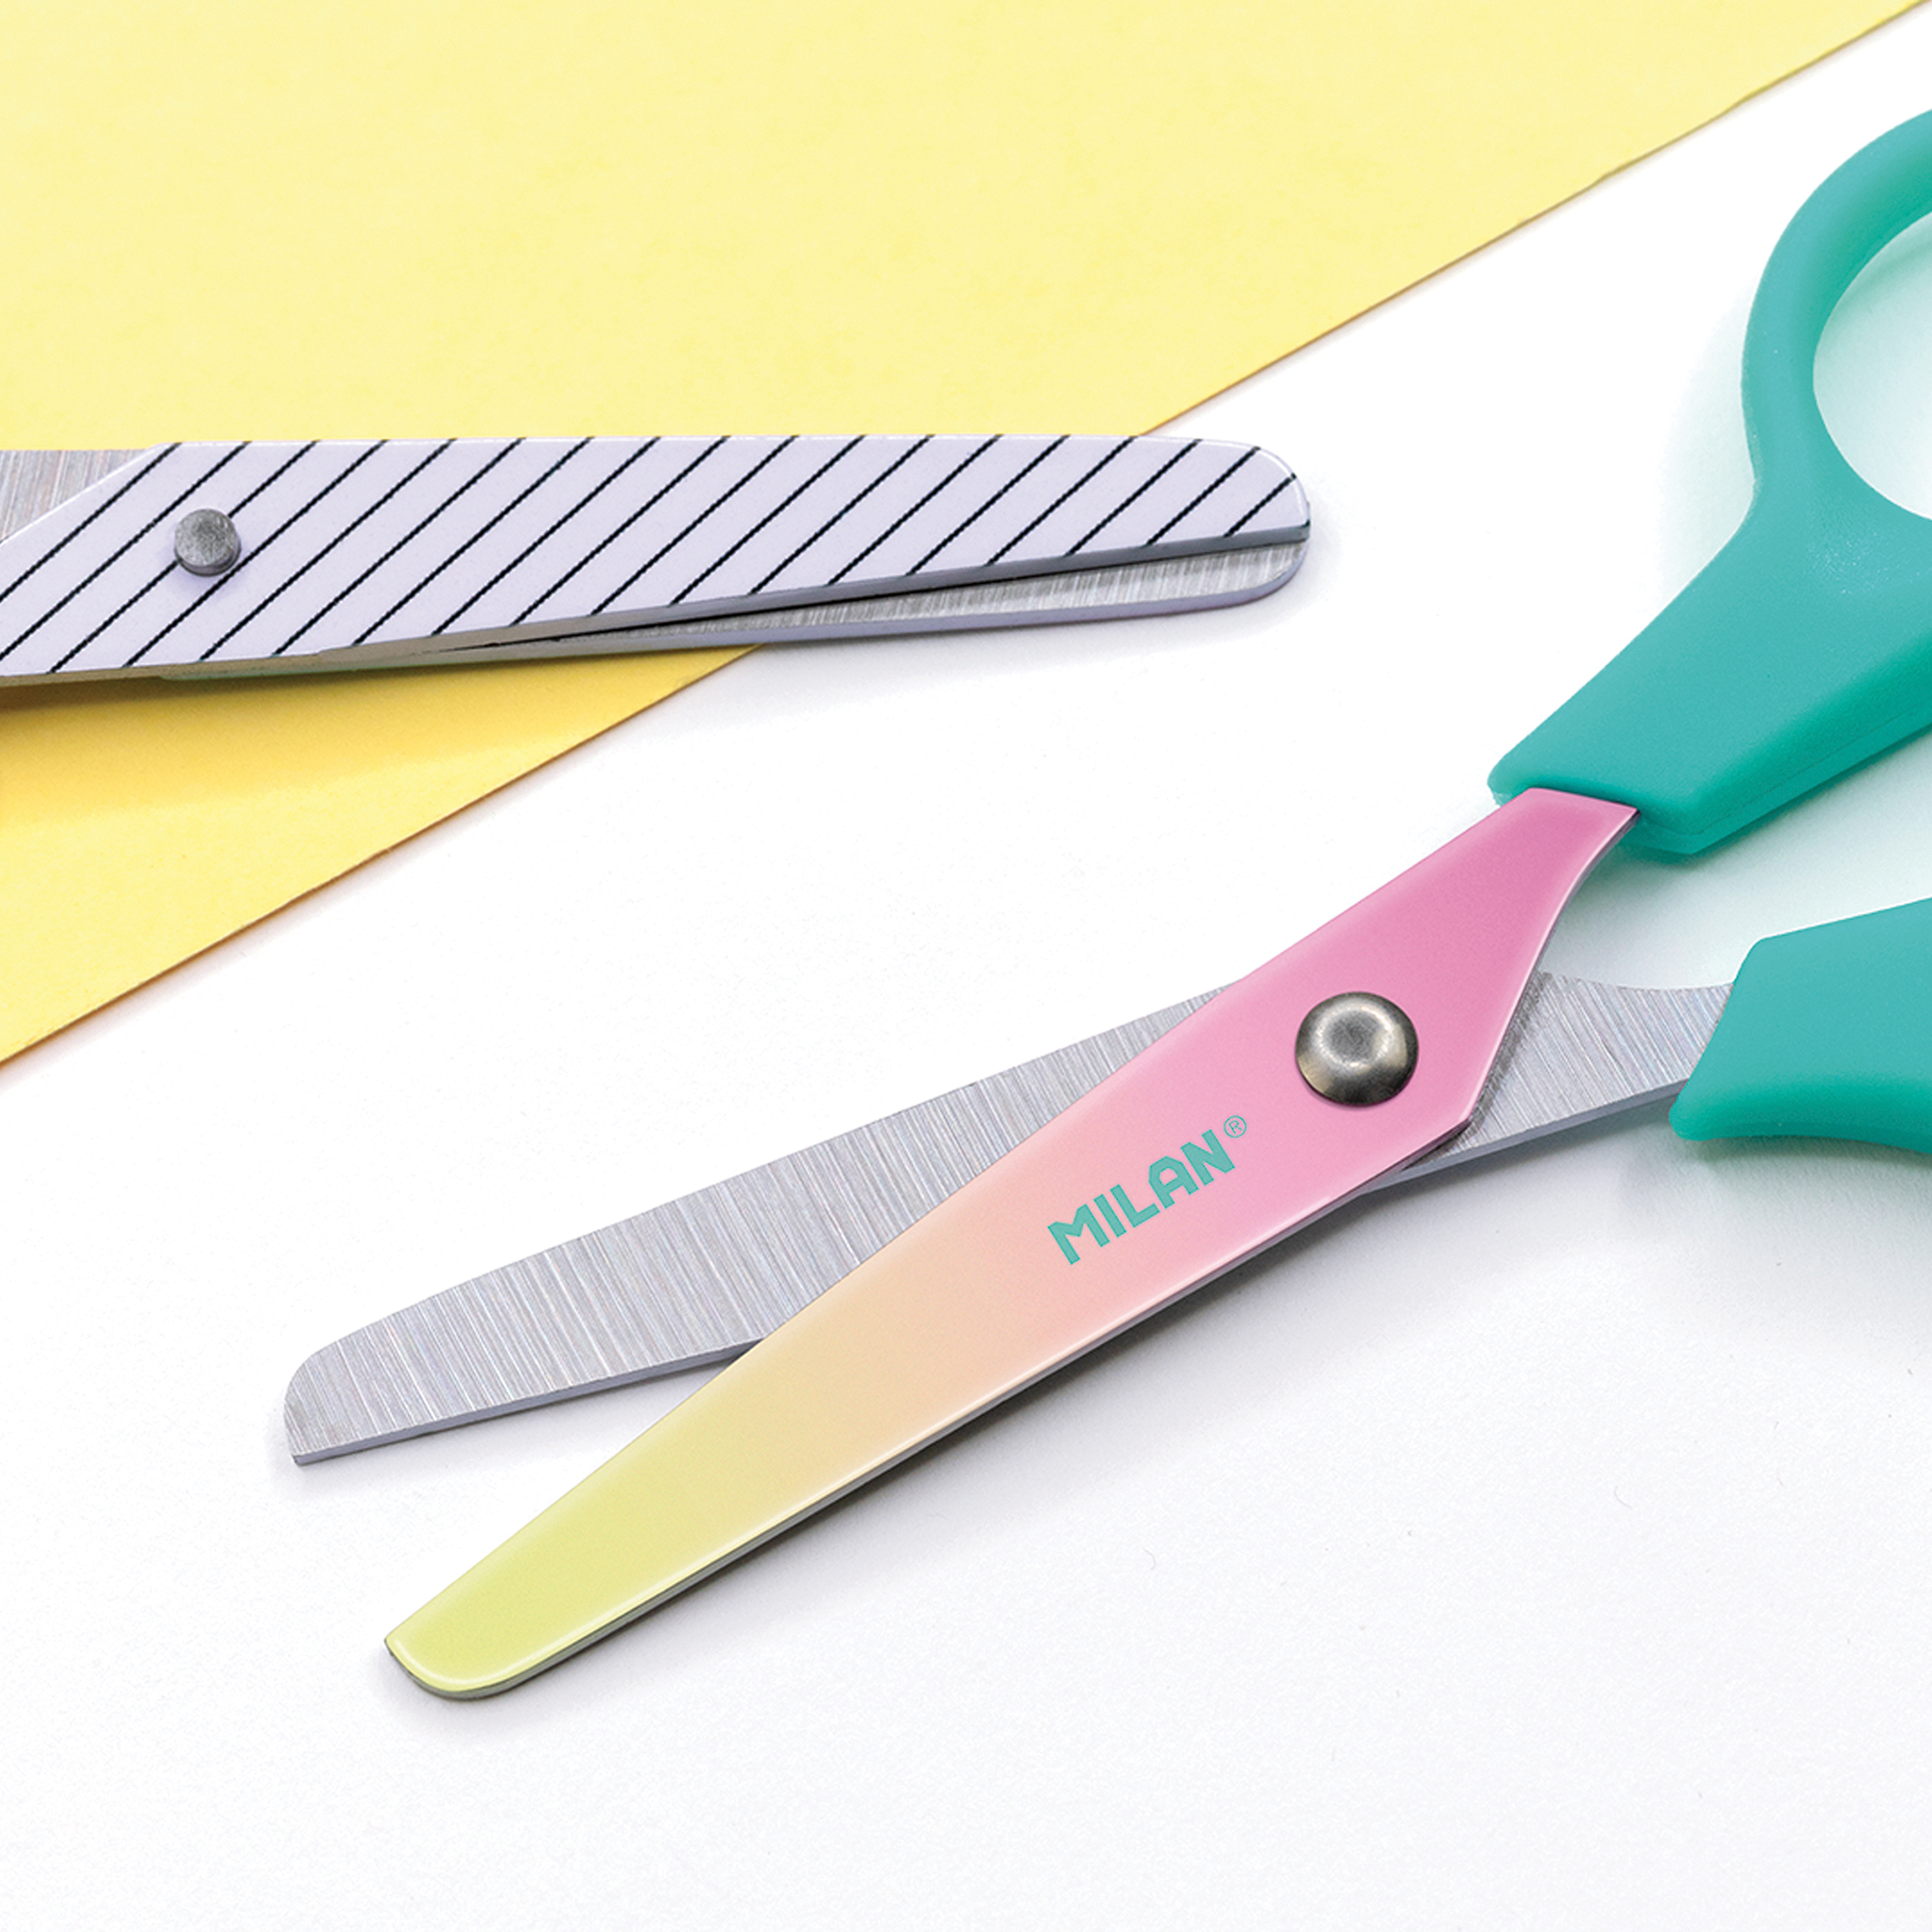 MILAN's first preschool scissors (4 colors available) - Shop milan